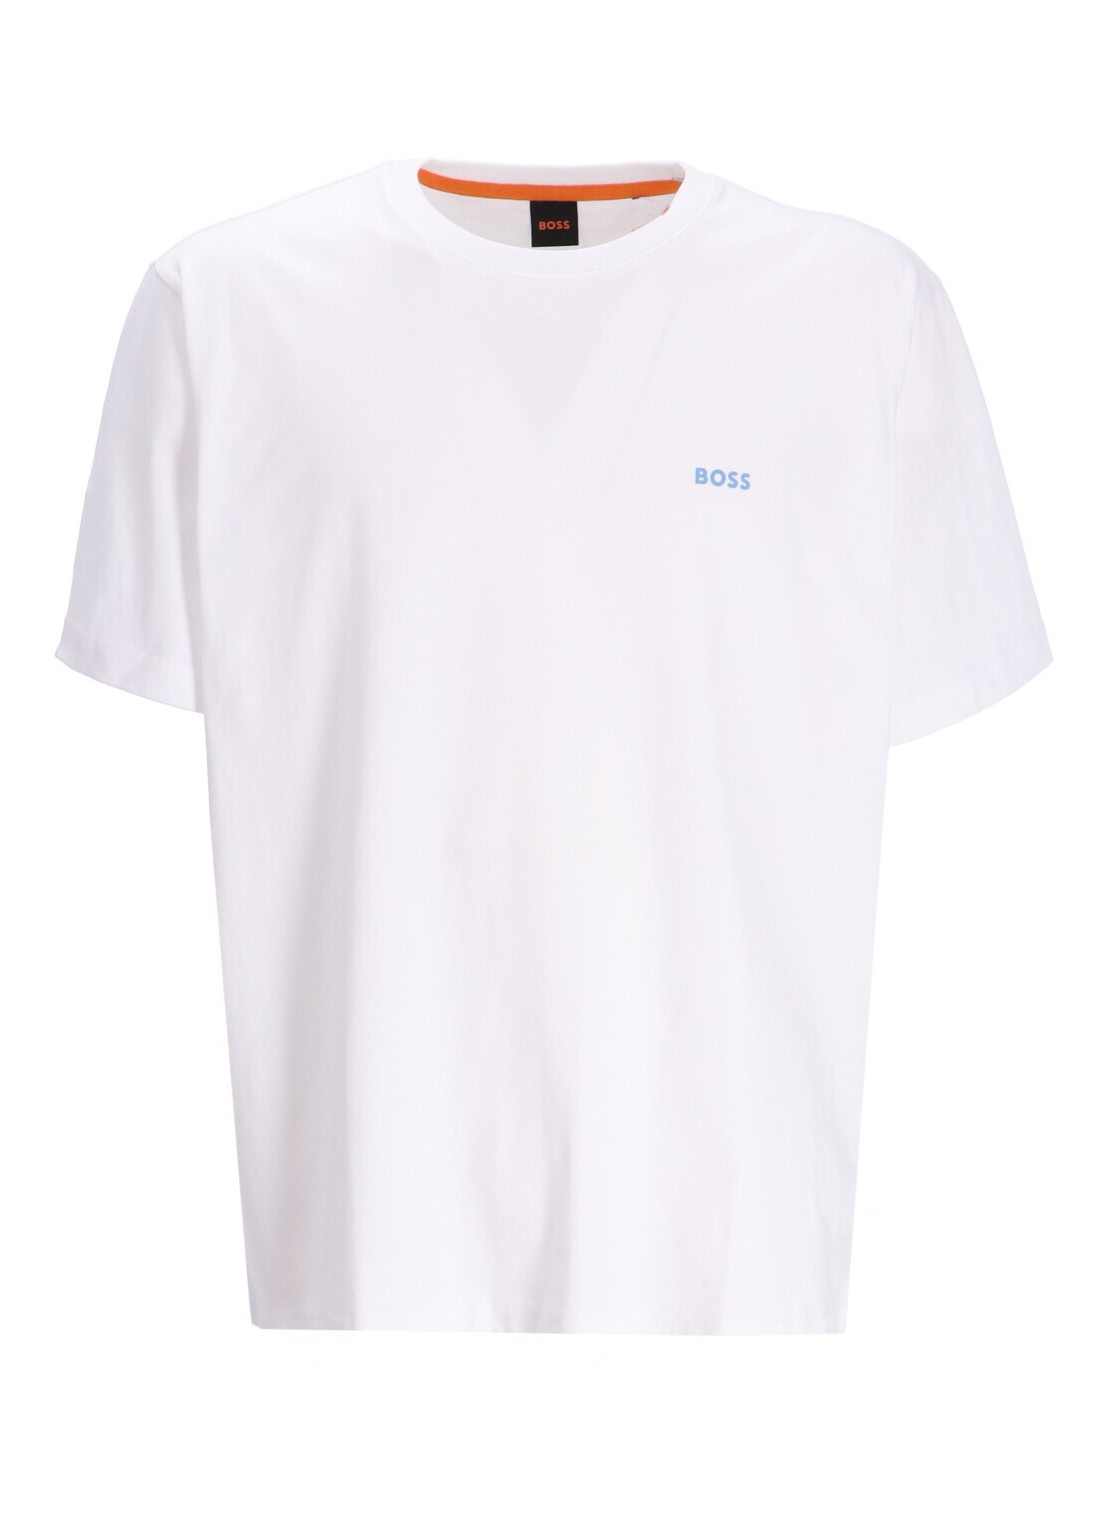 Camiseta boss t-shirt mante_coral - 50515357 101 talla XXL
 